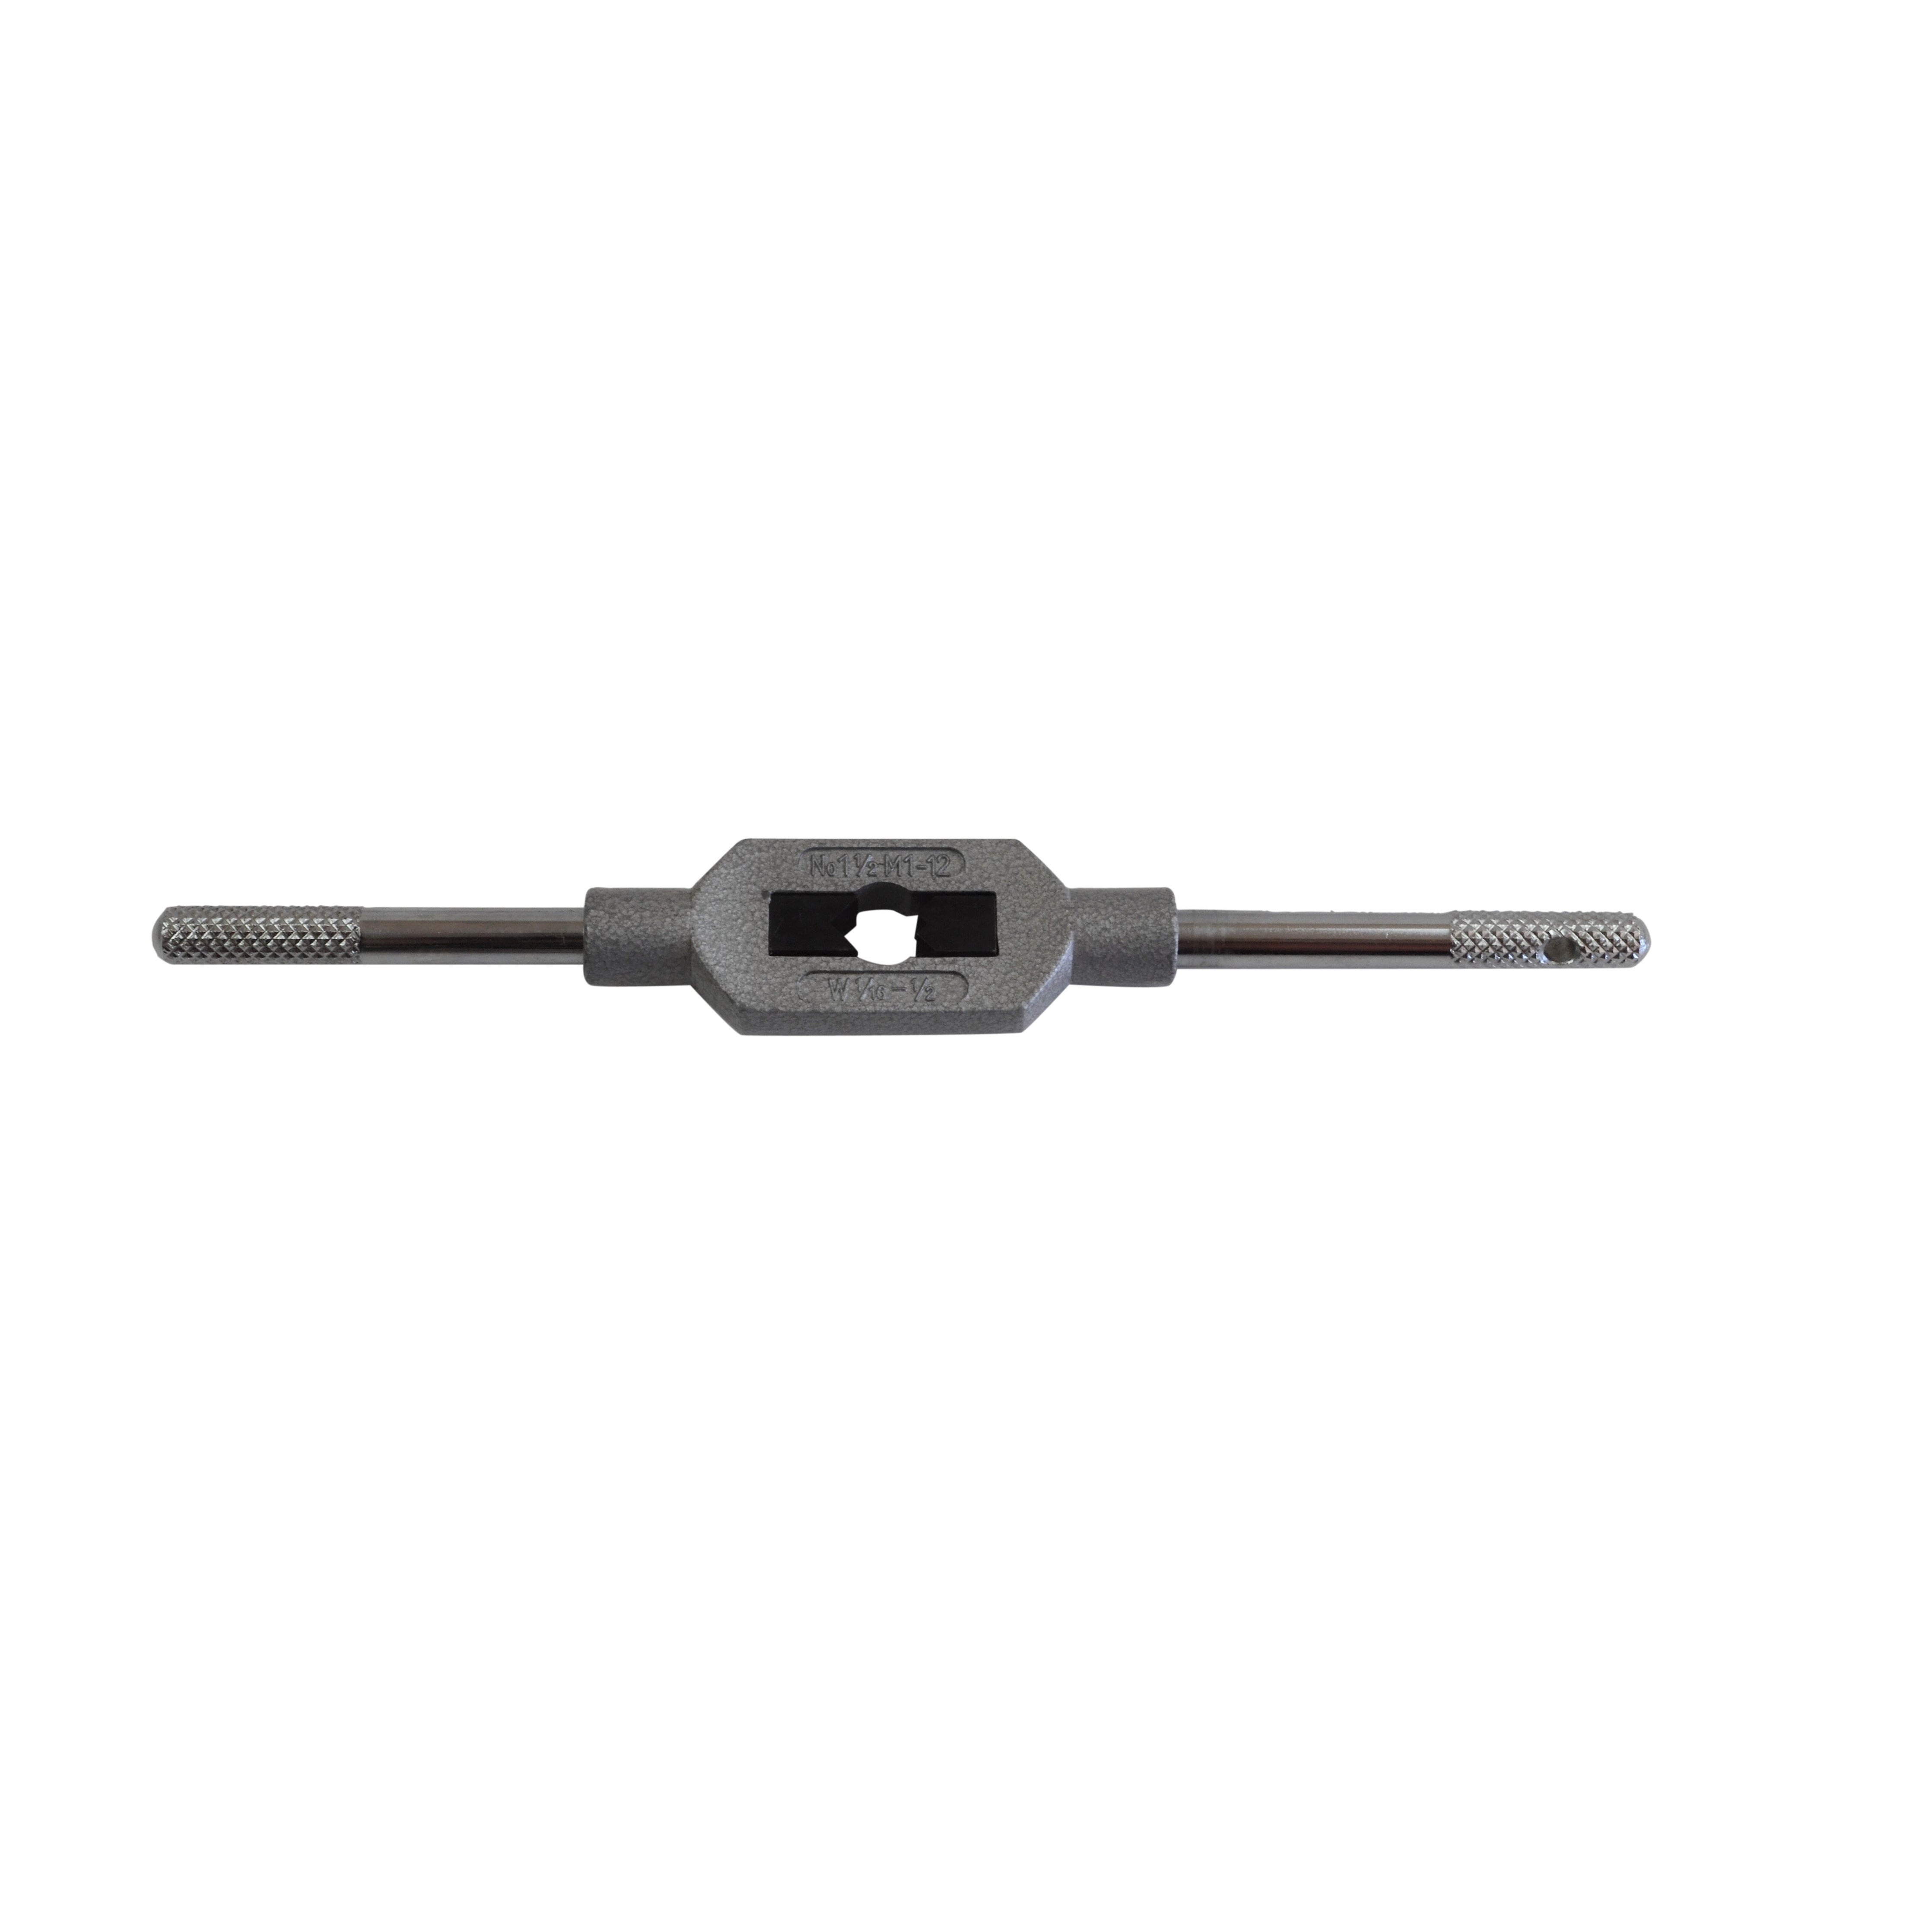 adjustable tap handle T type reamer wrench knurled grip handles No 1.5 M1 M12 industrial cnc metalwork supplies dies 